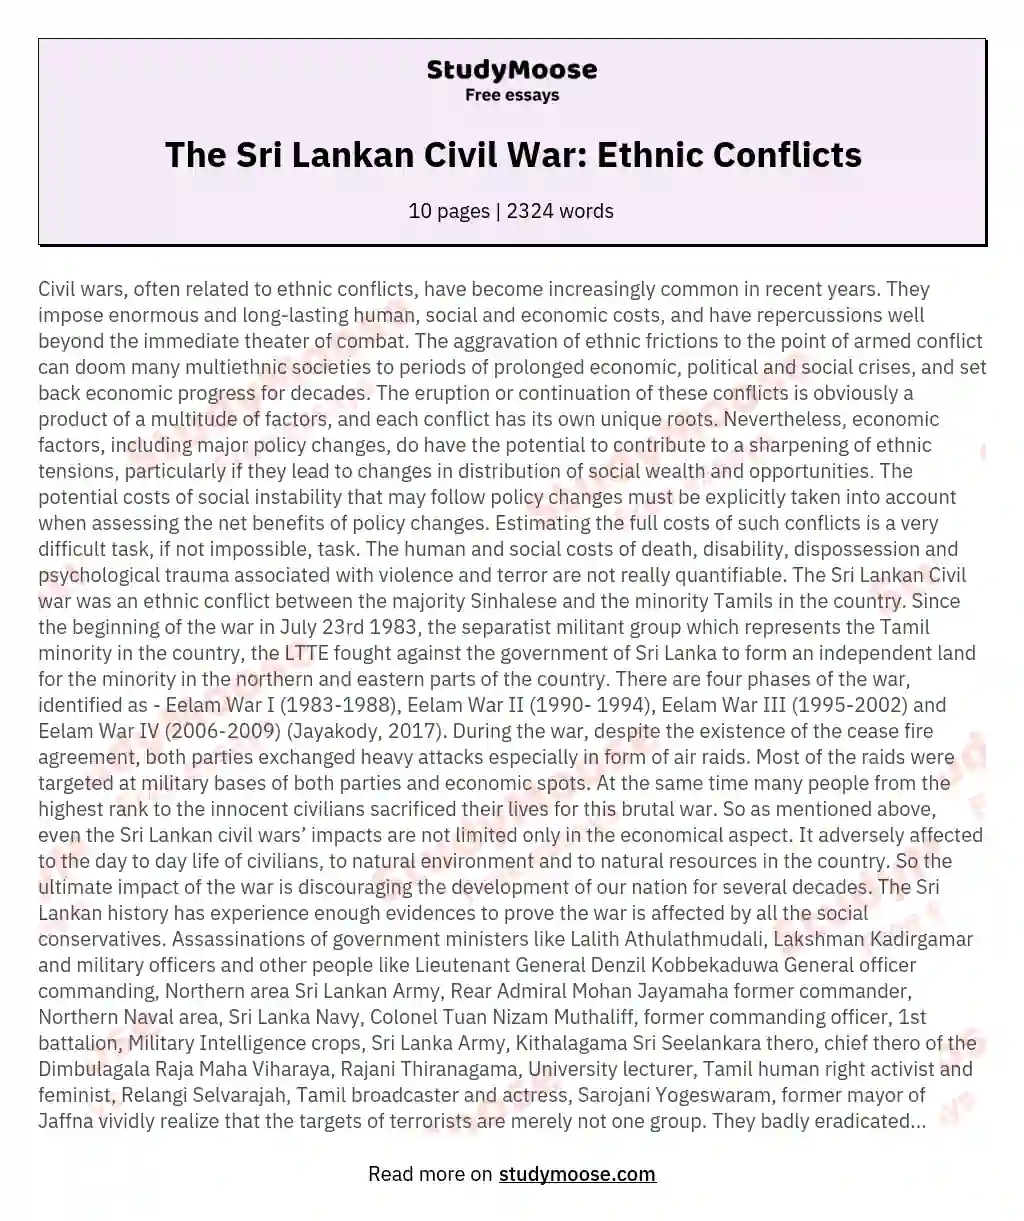 The Sri Lankan Civil War: Ethnic Conflicts essay